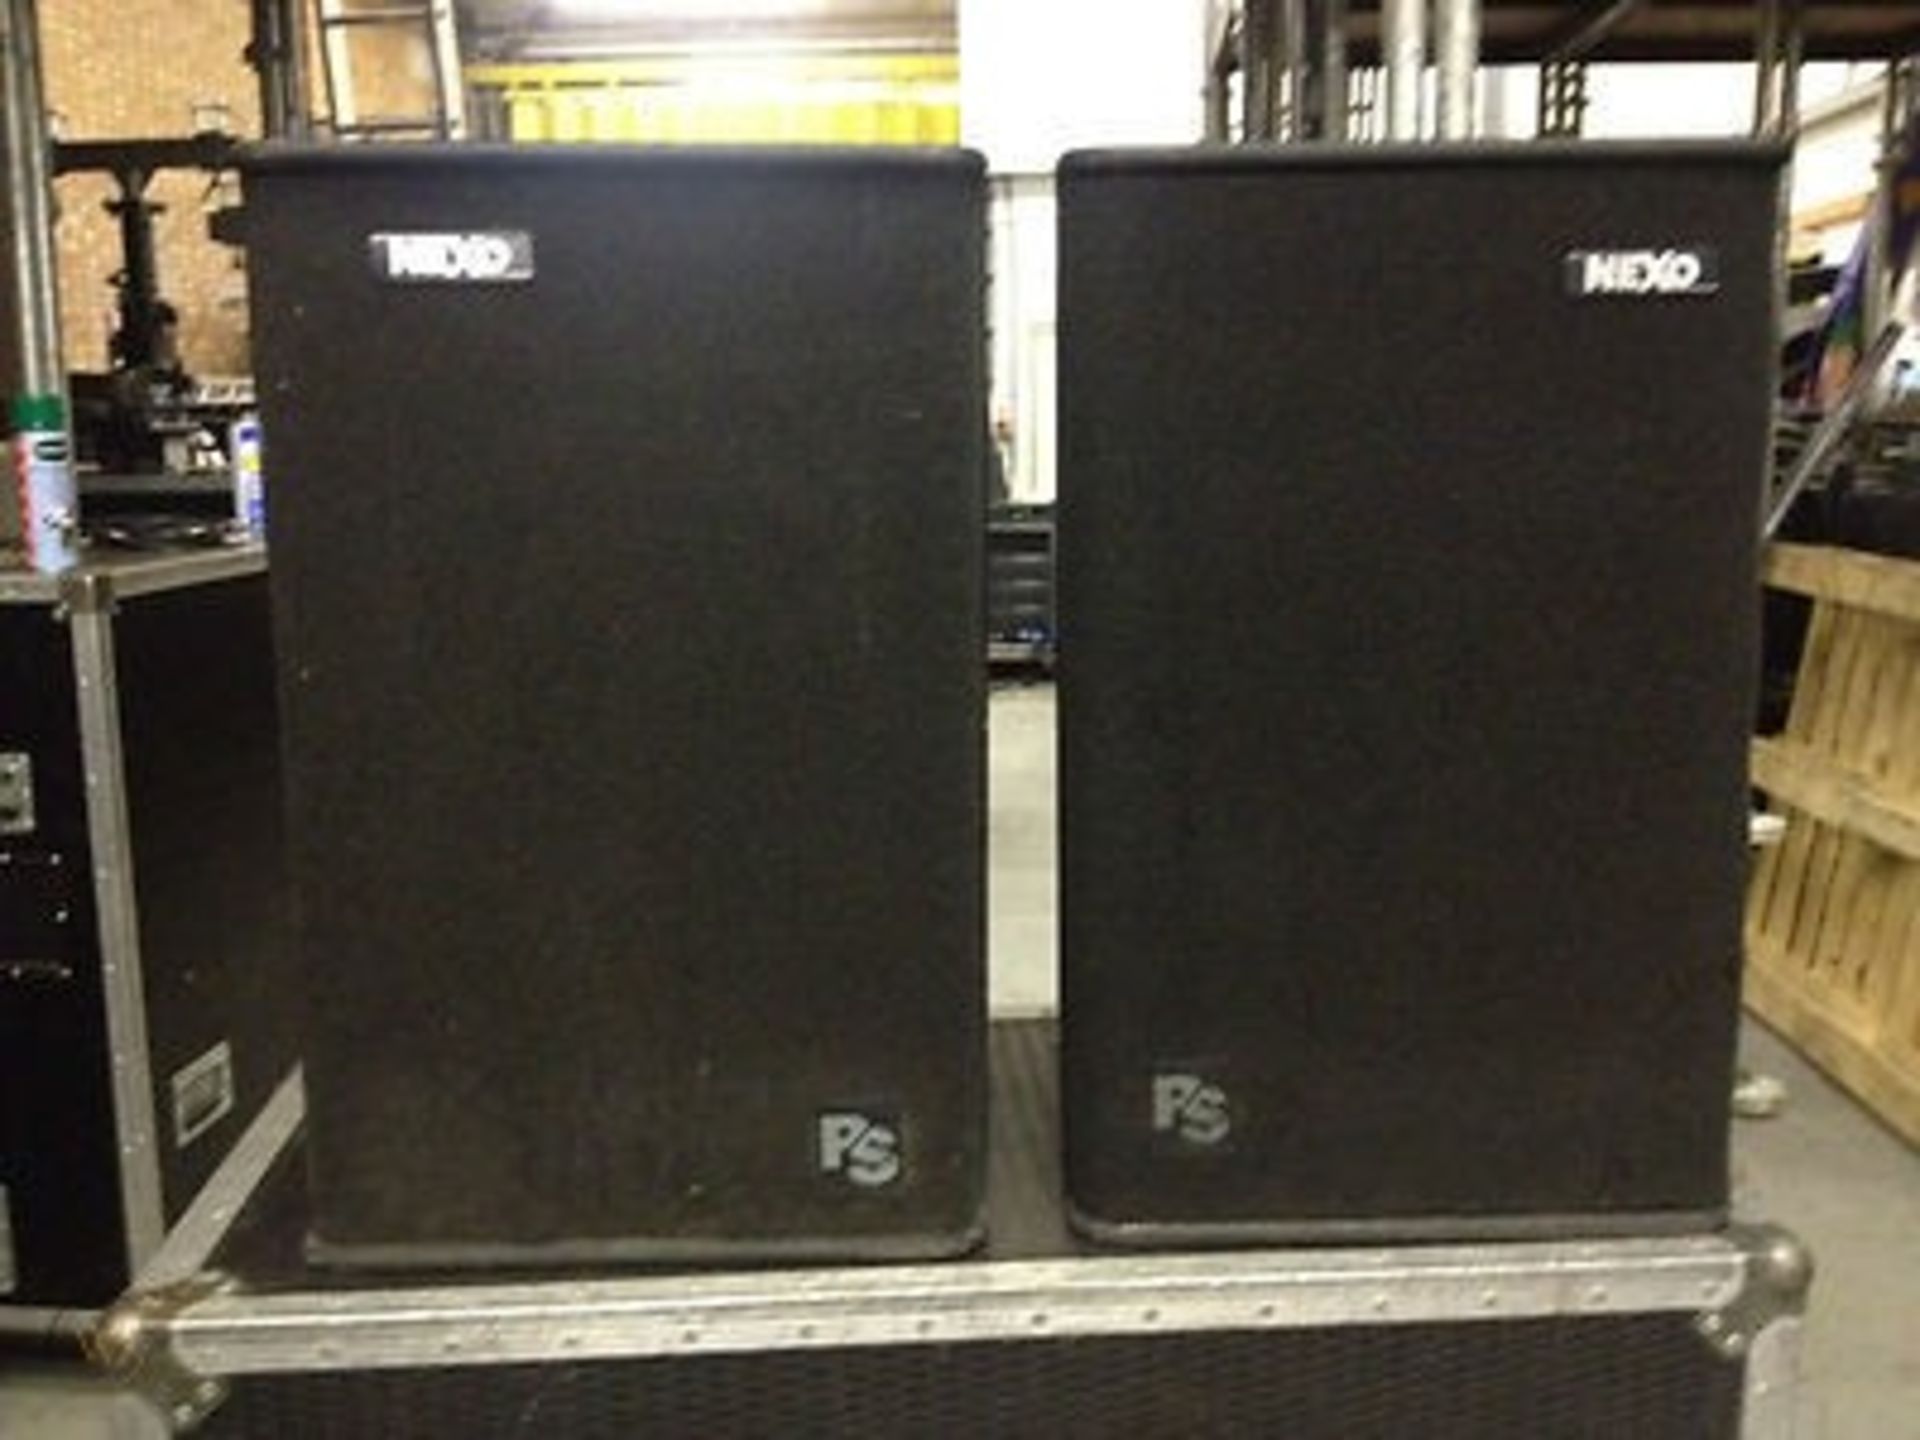 2 x Nexo PS15 Bass Bin Speakers In Dual Flight Case - Ref: 115 - CL581 - Image 2 of 2